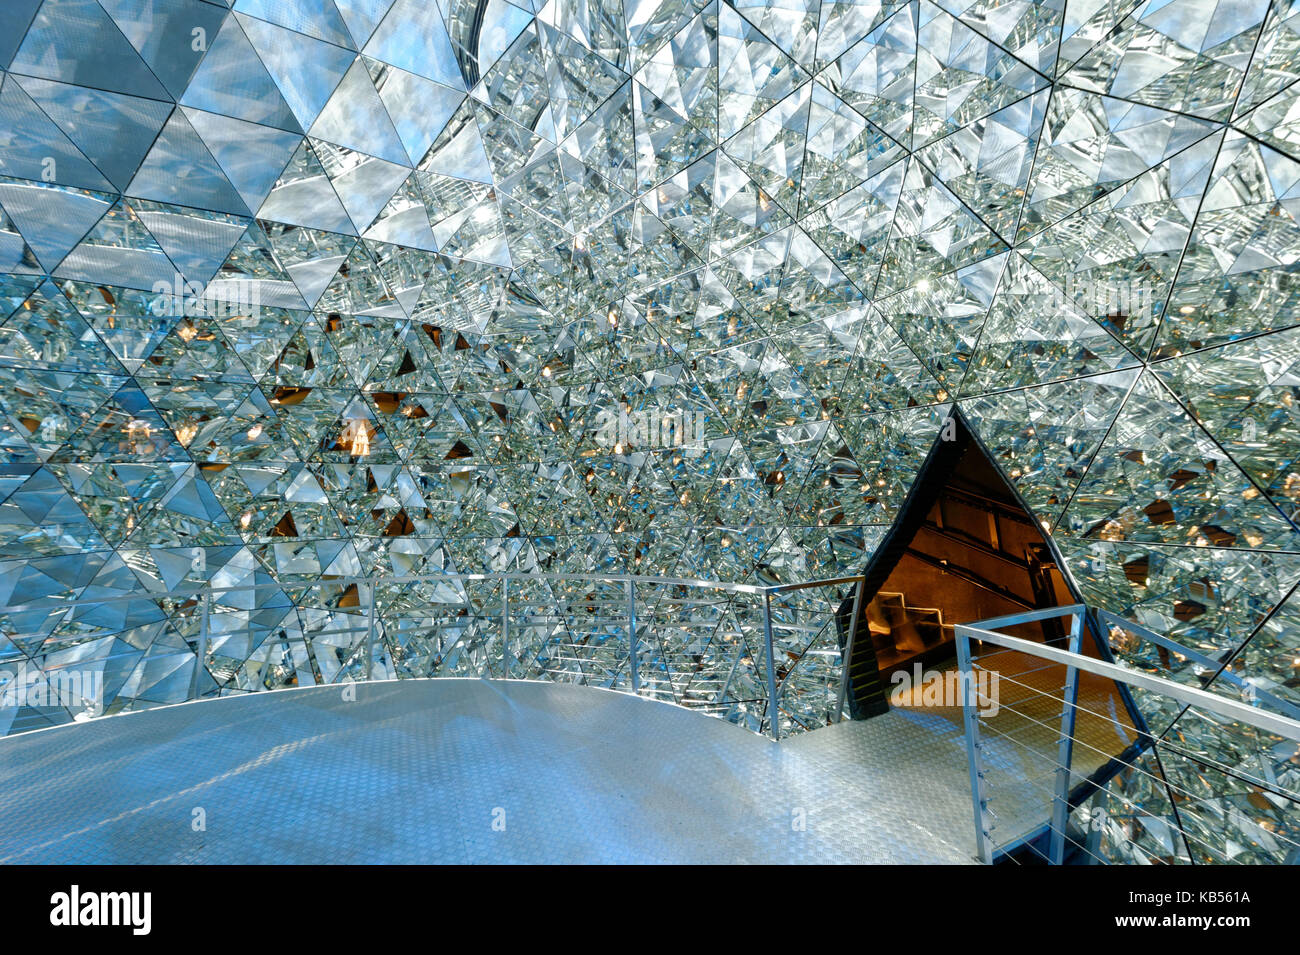 Swarovski Kristallwelten Fotos e Imágenes de stock - Alamy